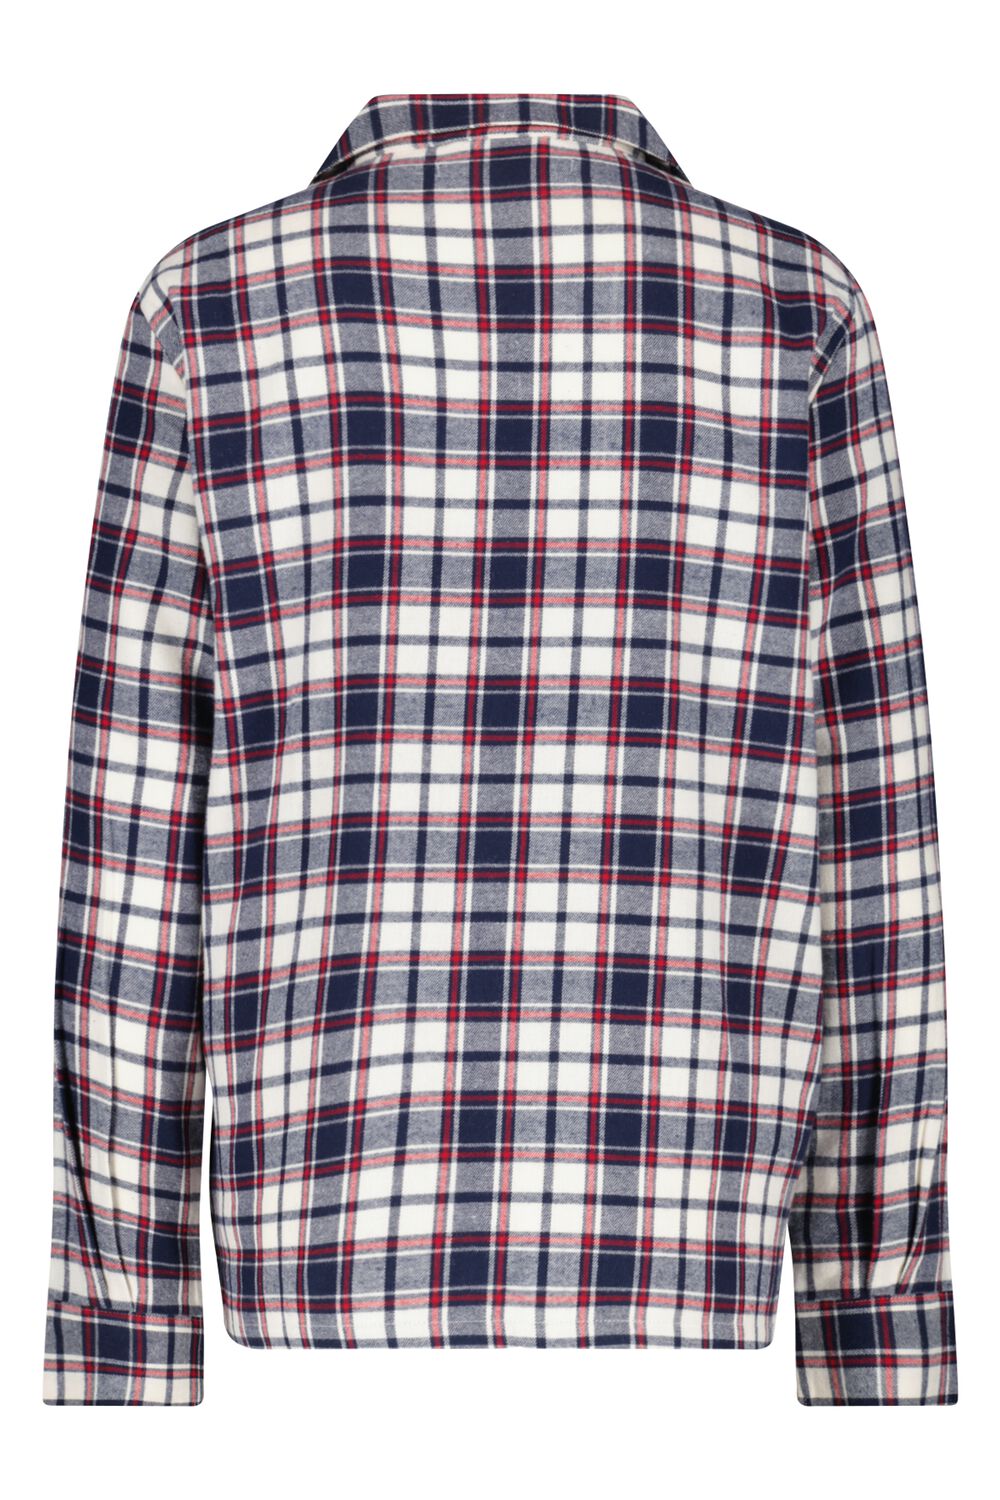 America Today Dames Pyjama Labello Shirt Rood